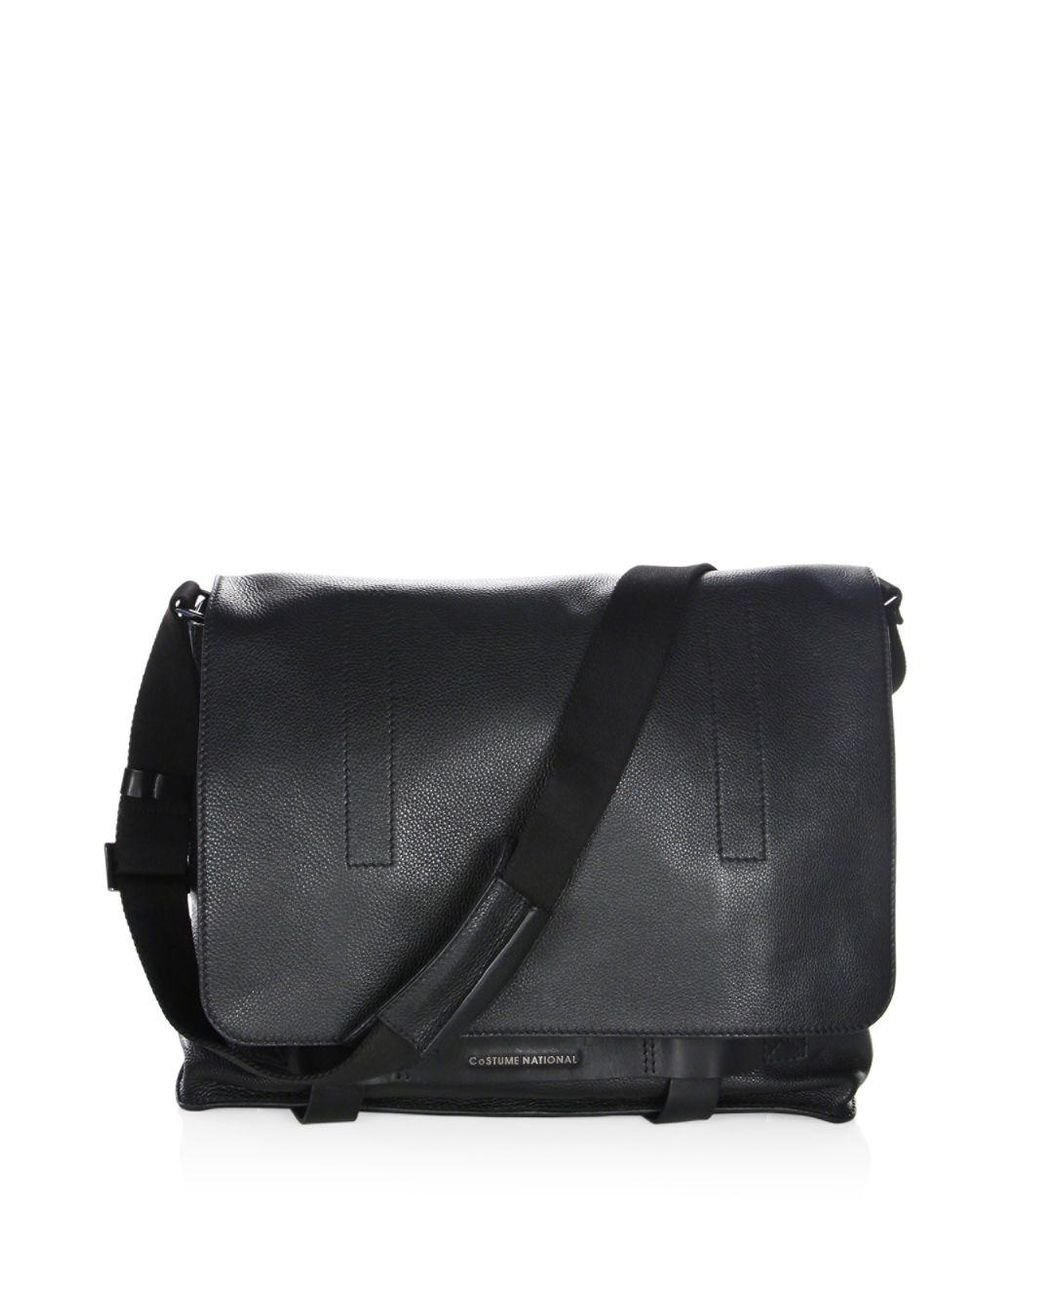 CoSTUME NATIONAL Solid Leather Messenger Bag in Black for Men | Lyst